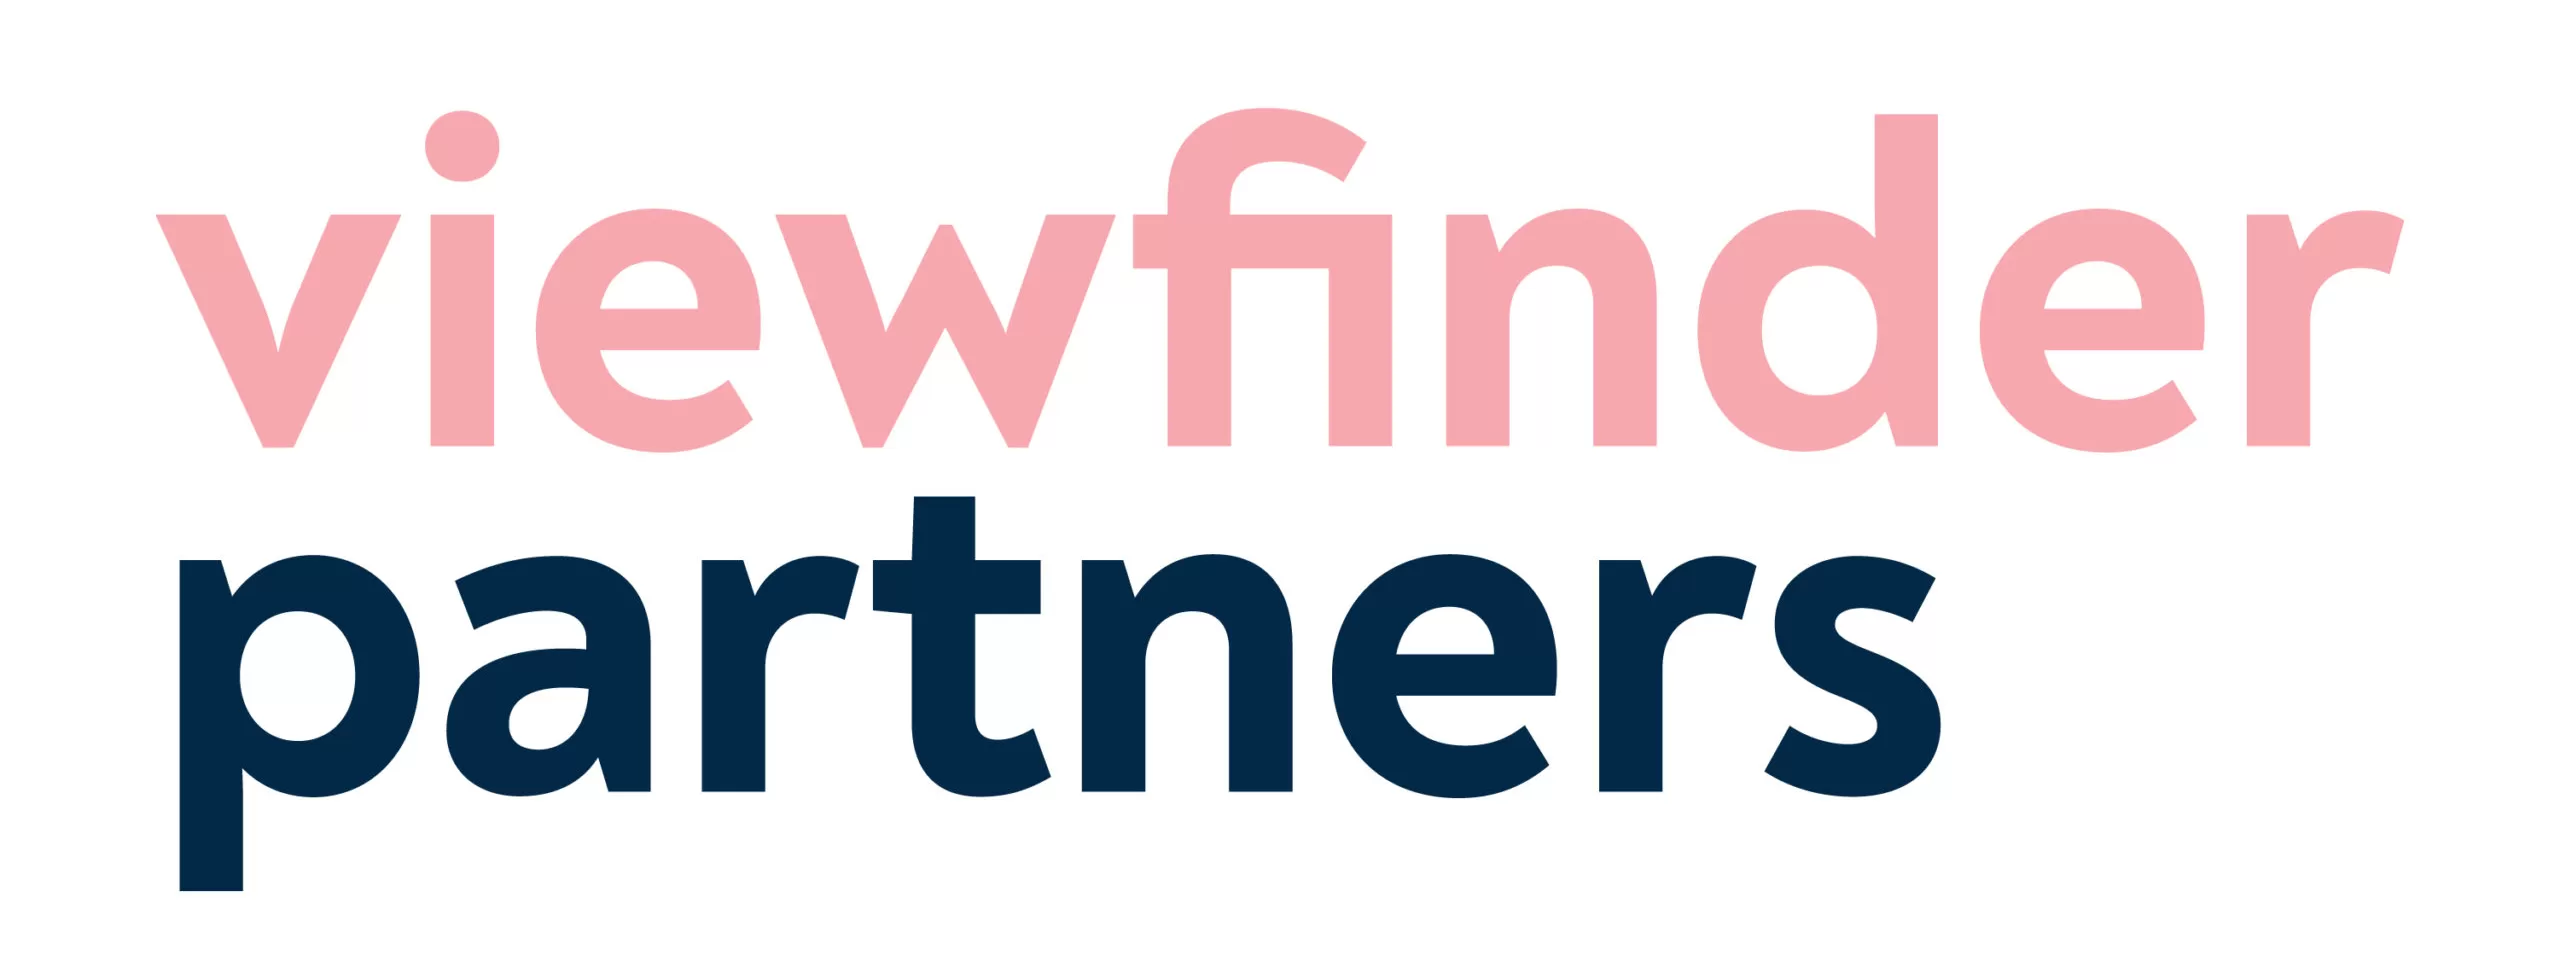 Viewfinder Partners Logo